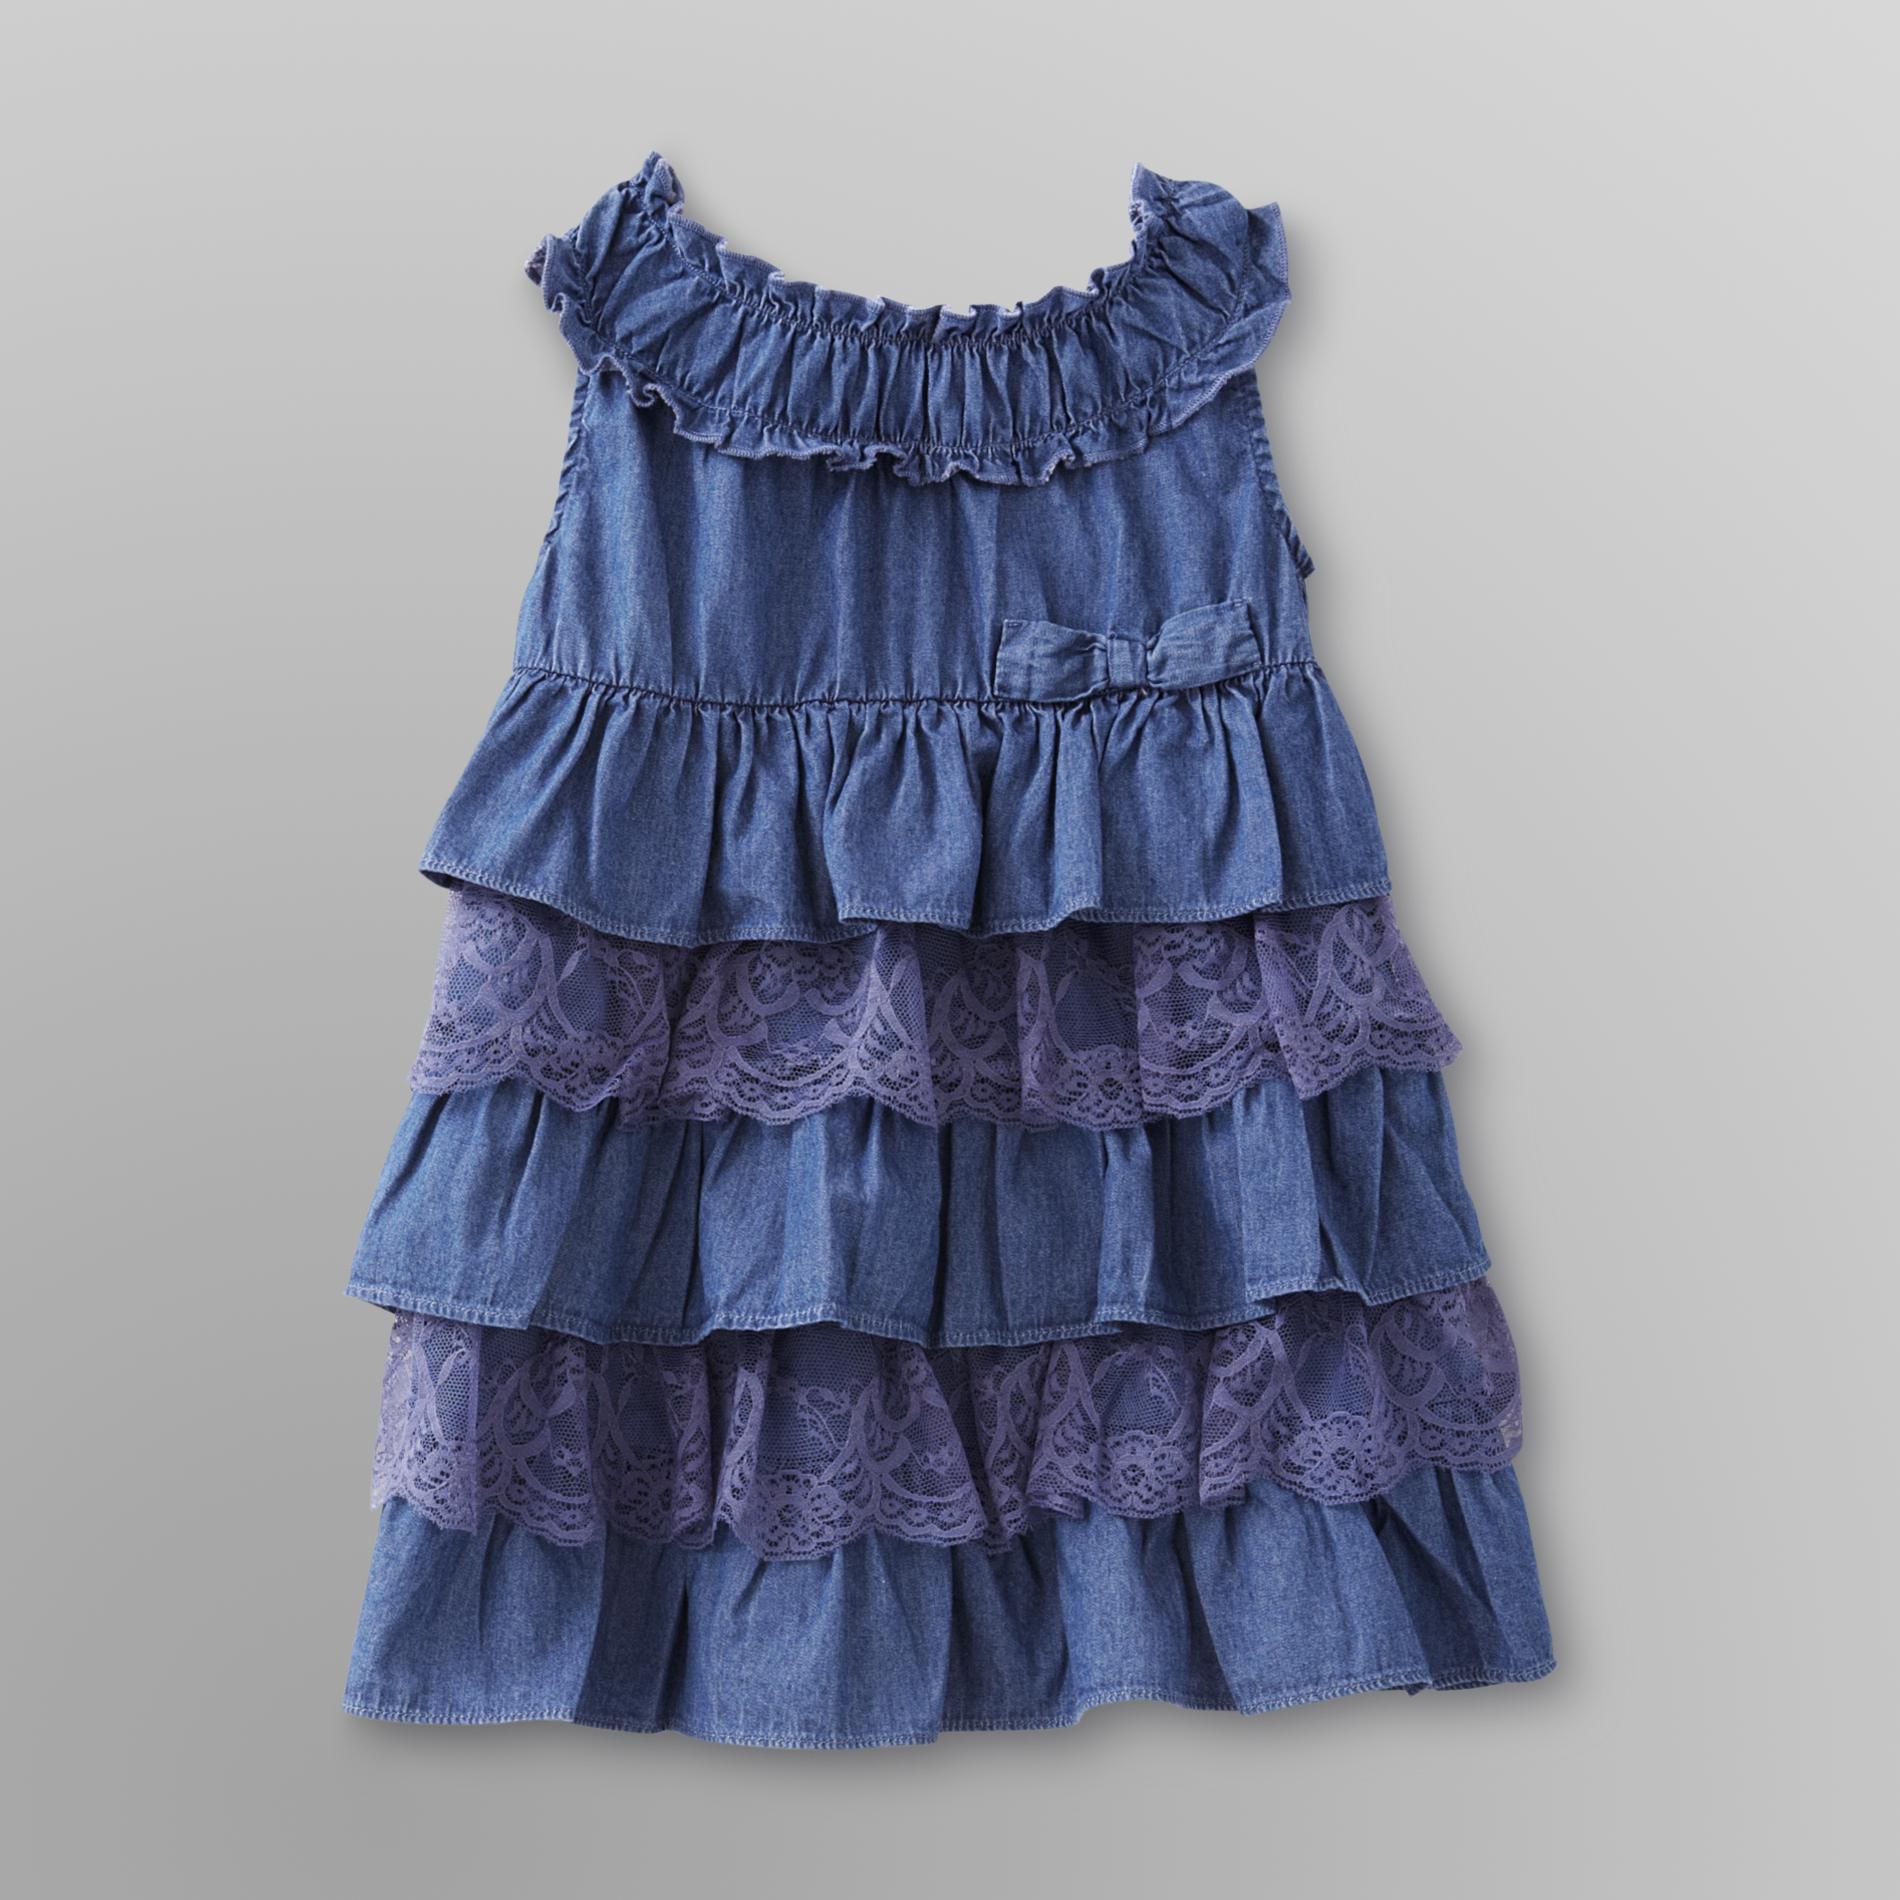 Route 66 Infant & Toddler Girl's Chambray Ruffled Dress